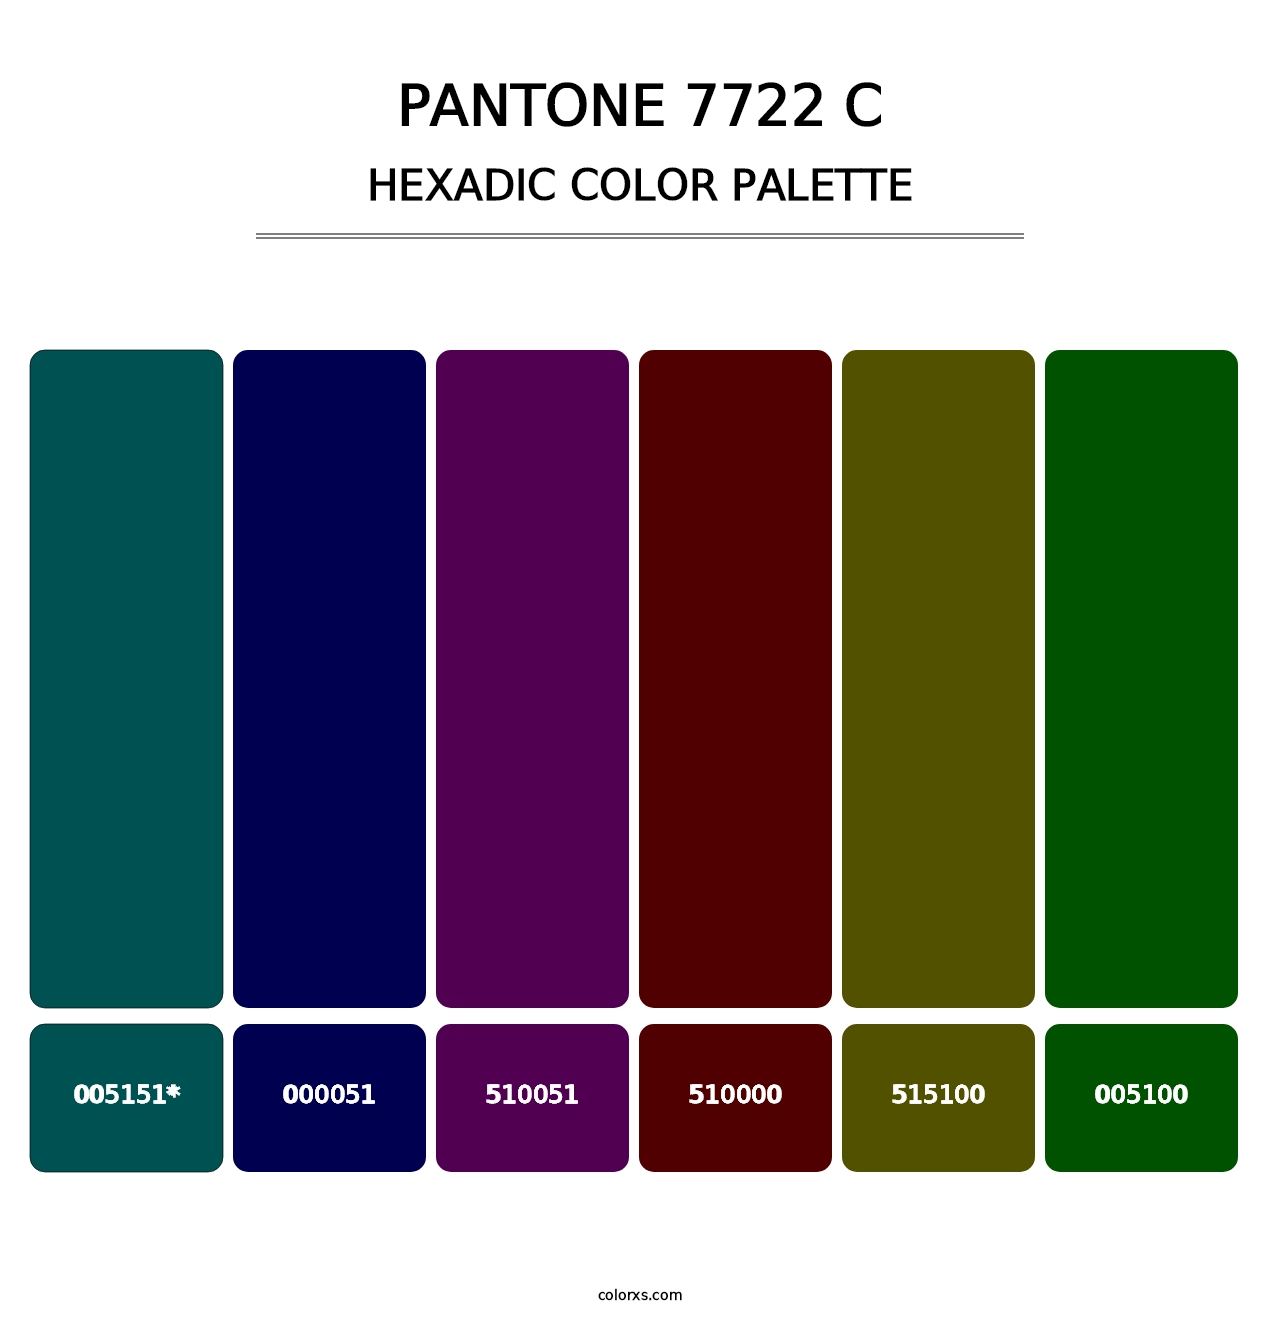 PANTONE 7722 C - Hexadic Color Palette